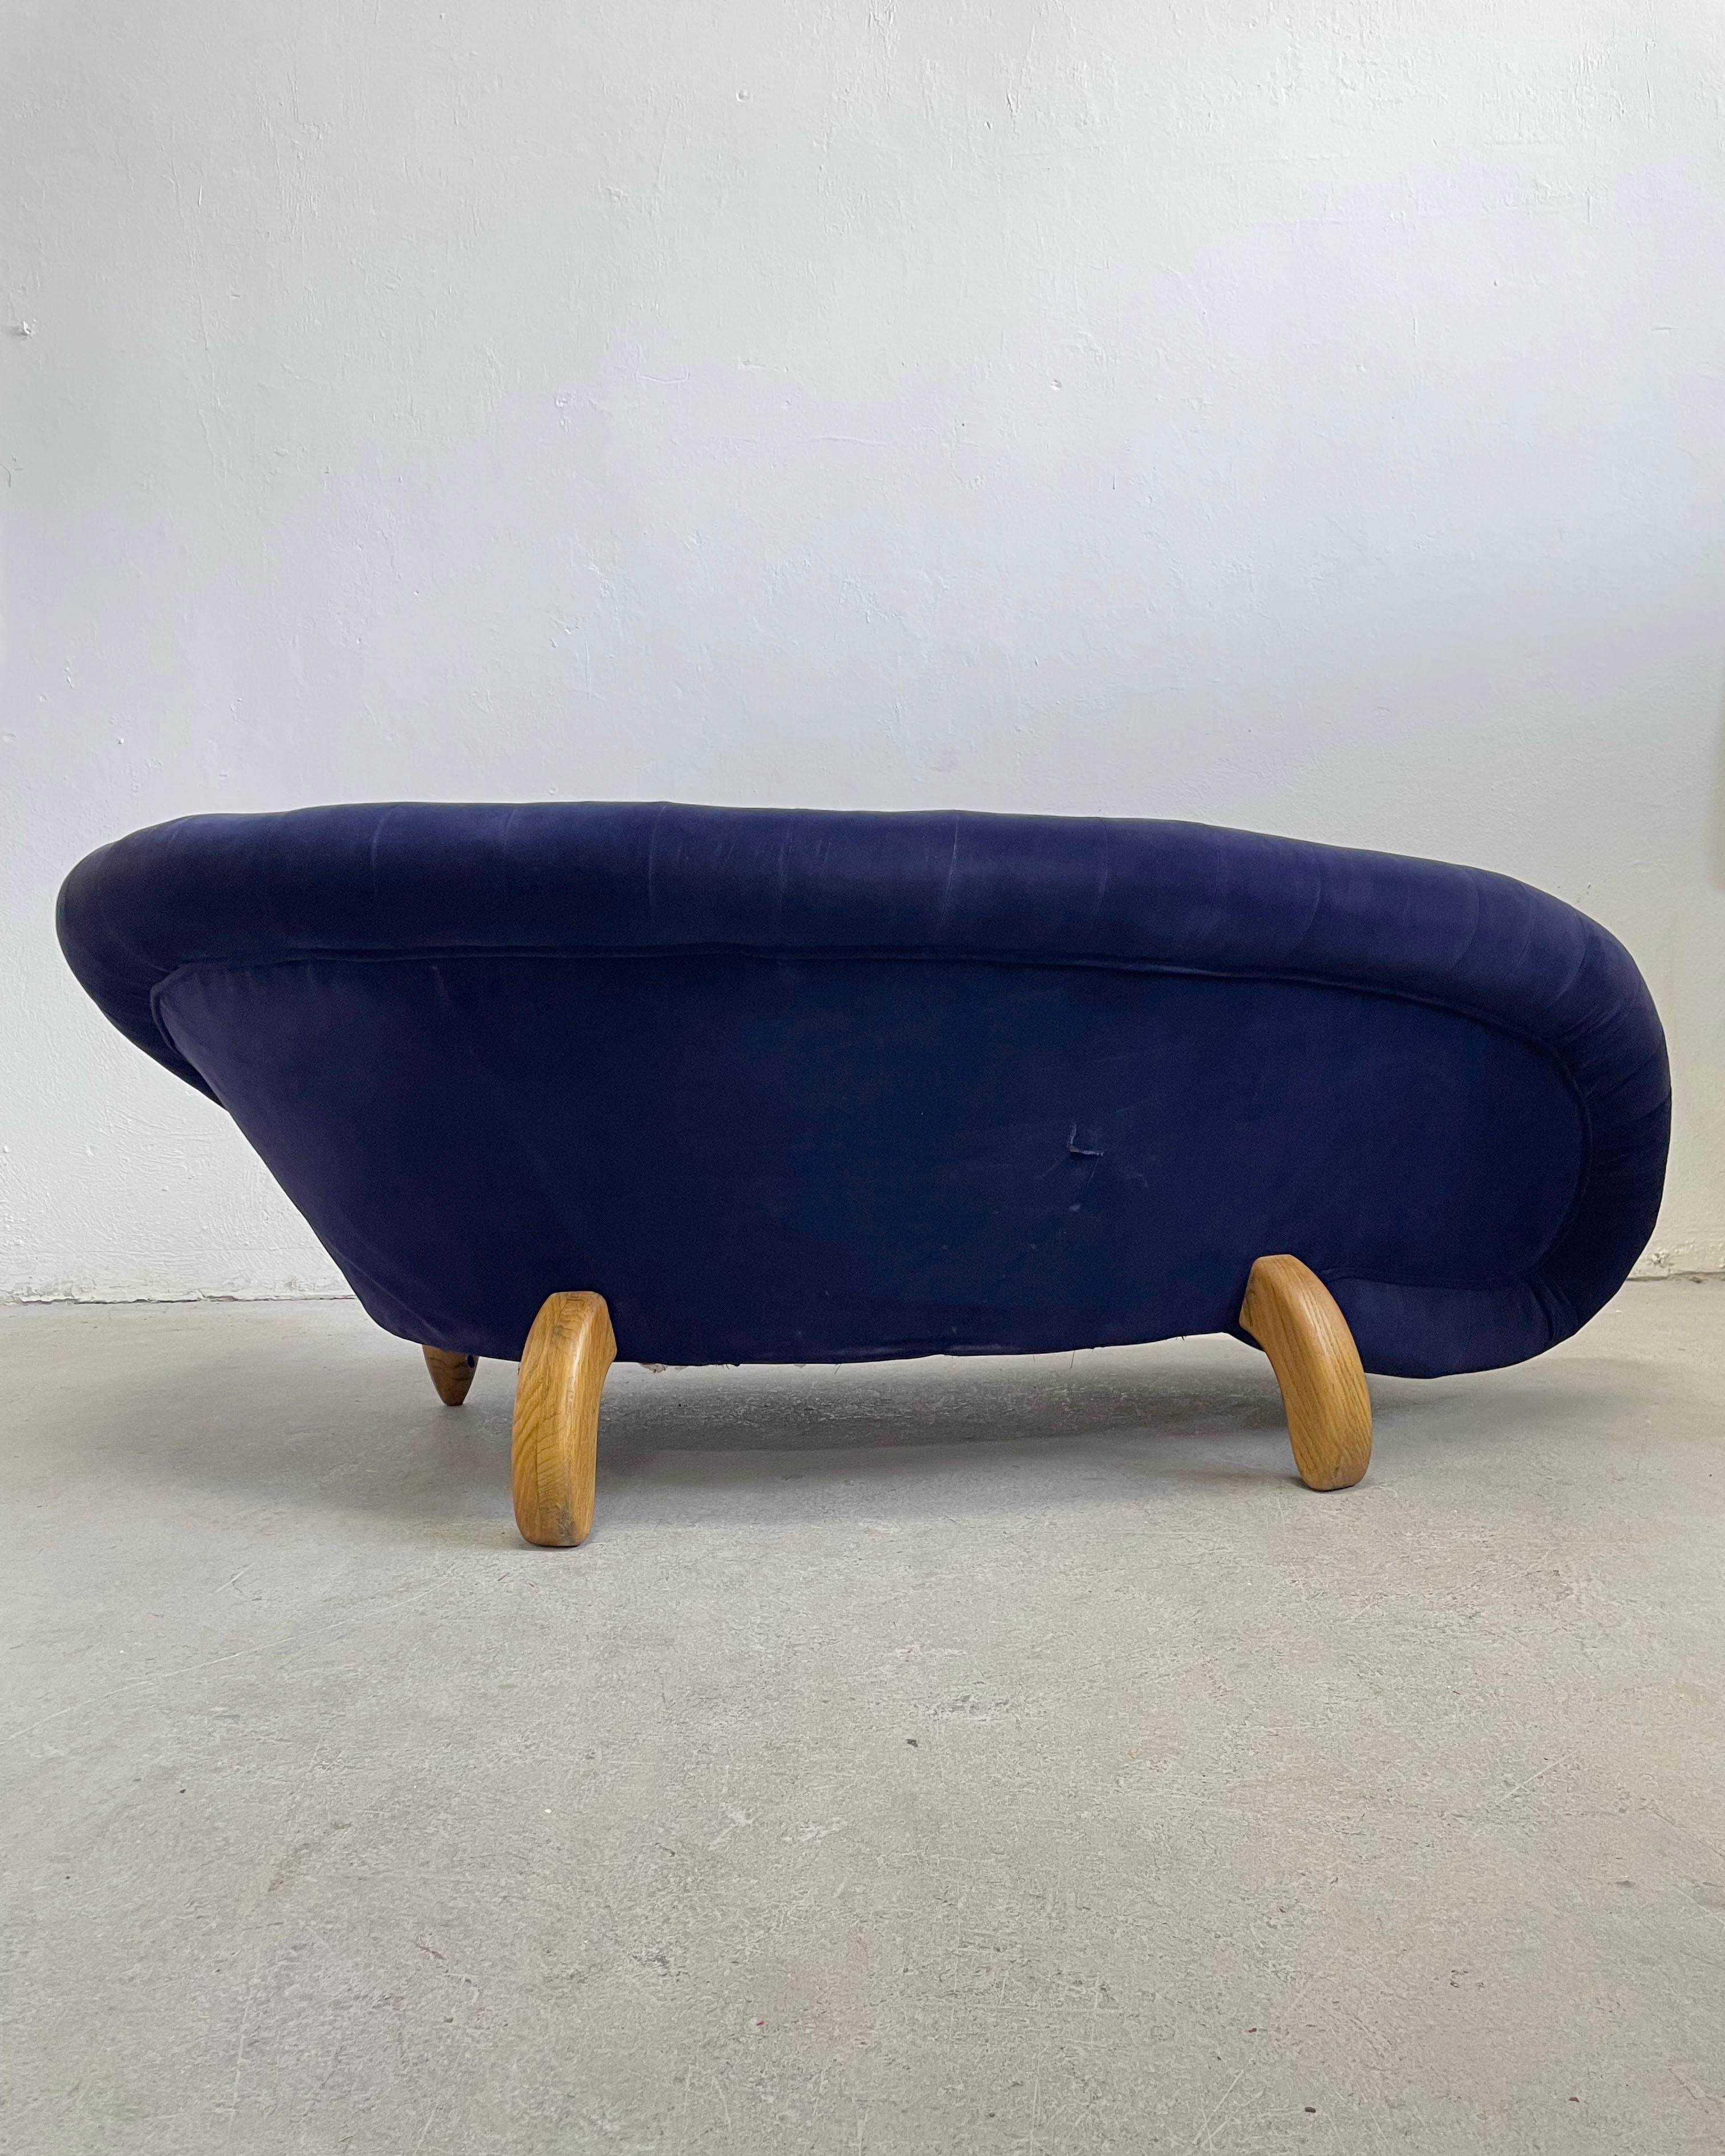 Vintage 20th Century Modern Serpentine Curved Velvet Sofa in Navy Blue Color For Sale 1